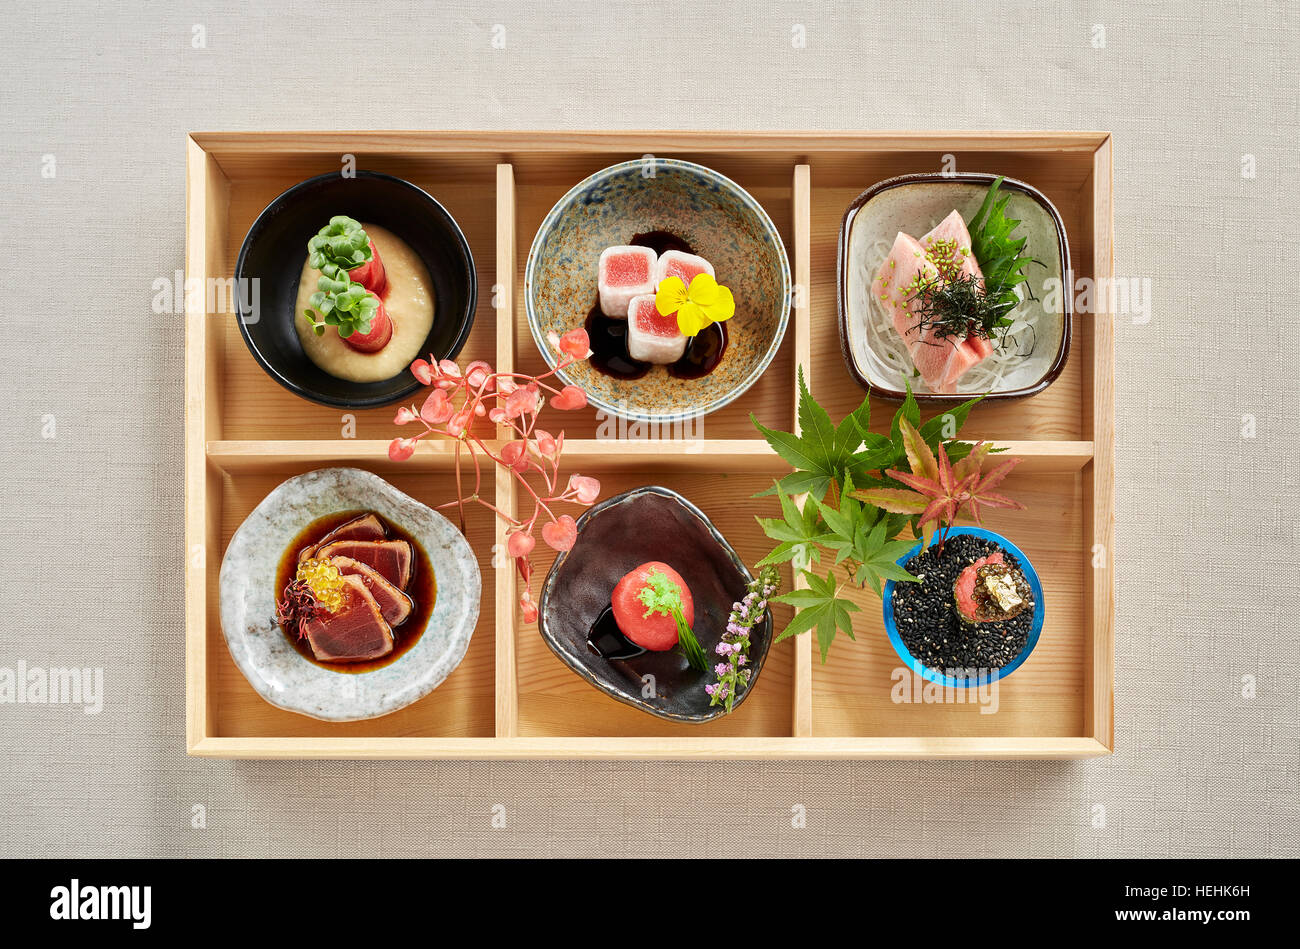 https://c8.alamy.com/comp/HEHK6H/japanese-food-wooden-bento-box-overhead-view-six-dishes-pretty-bowls-HEHK6H.jpg